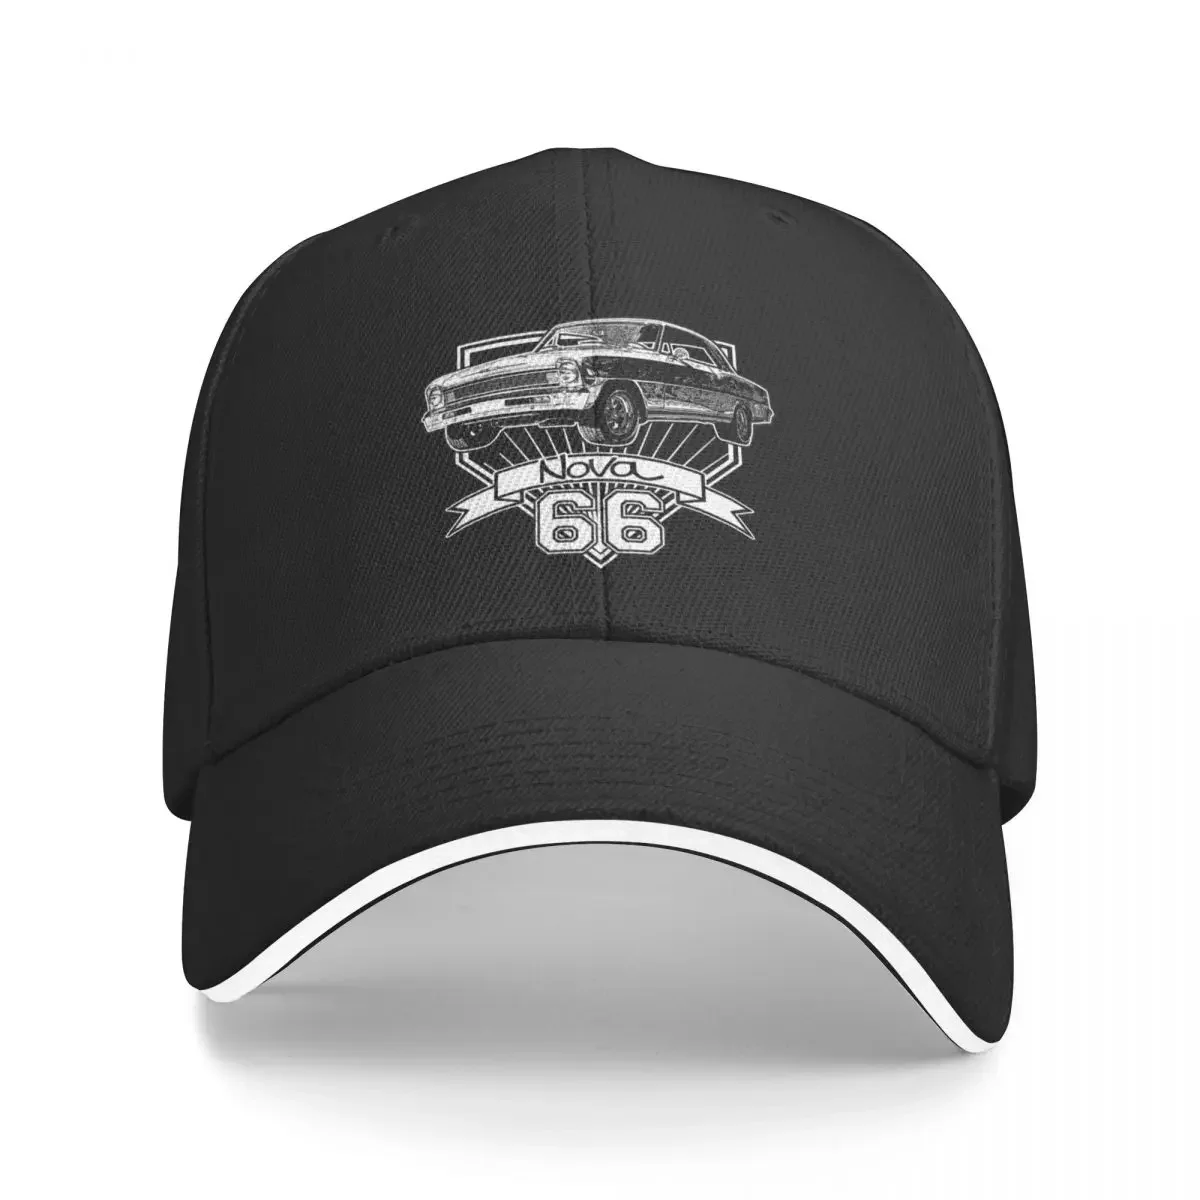 

New 1966 Nova Baseball Cap western hats Icon Hat For Men Women's